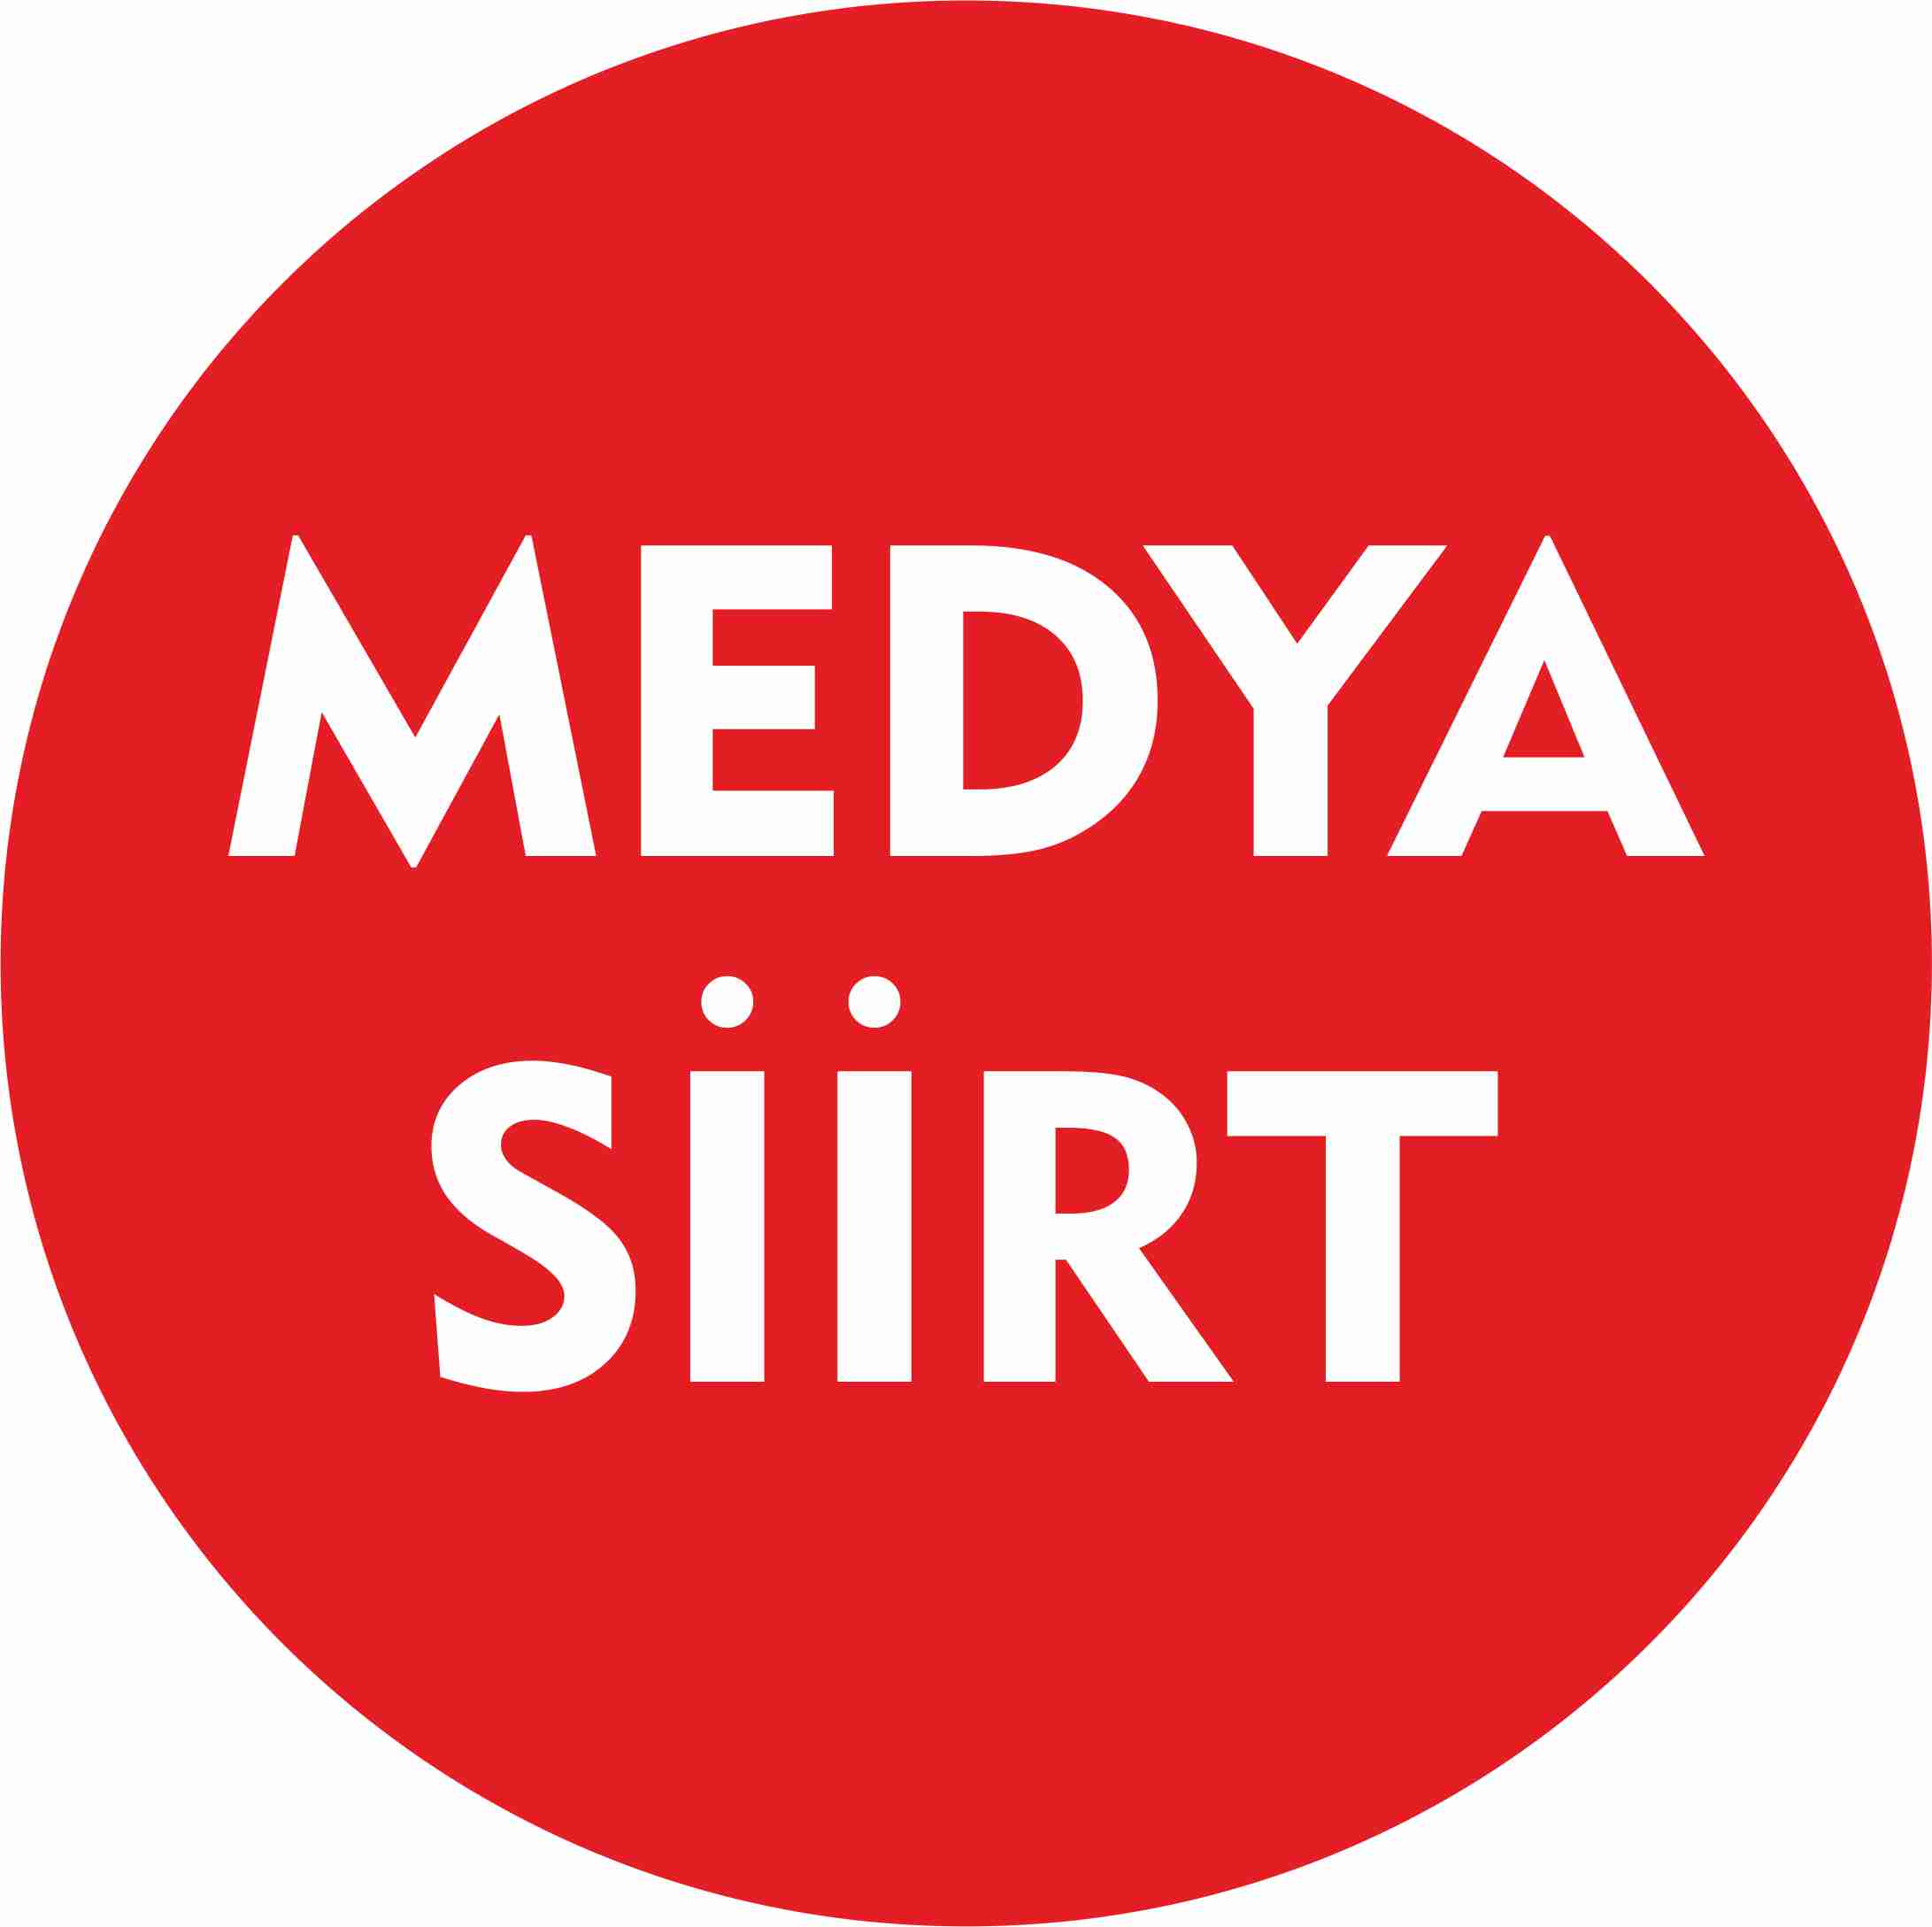 www.medyasiirt.com